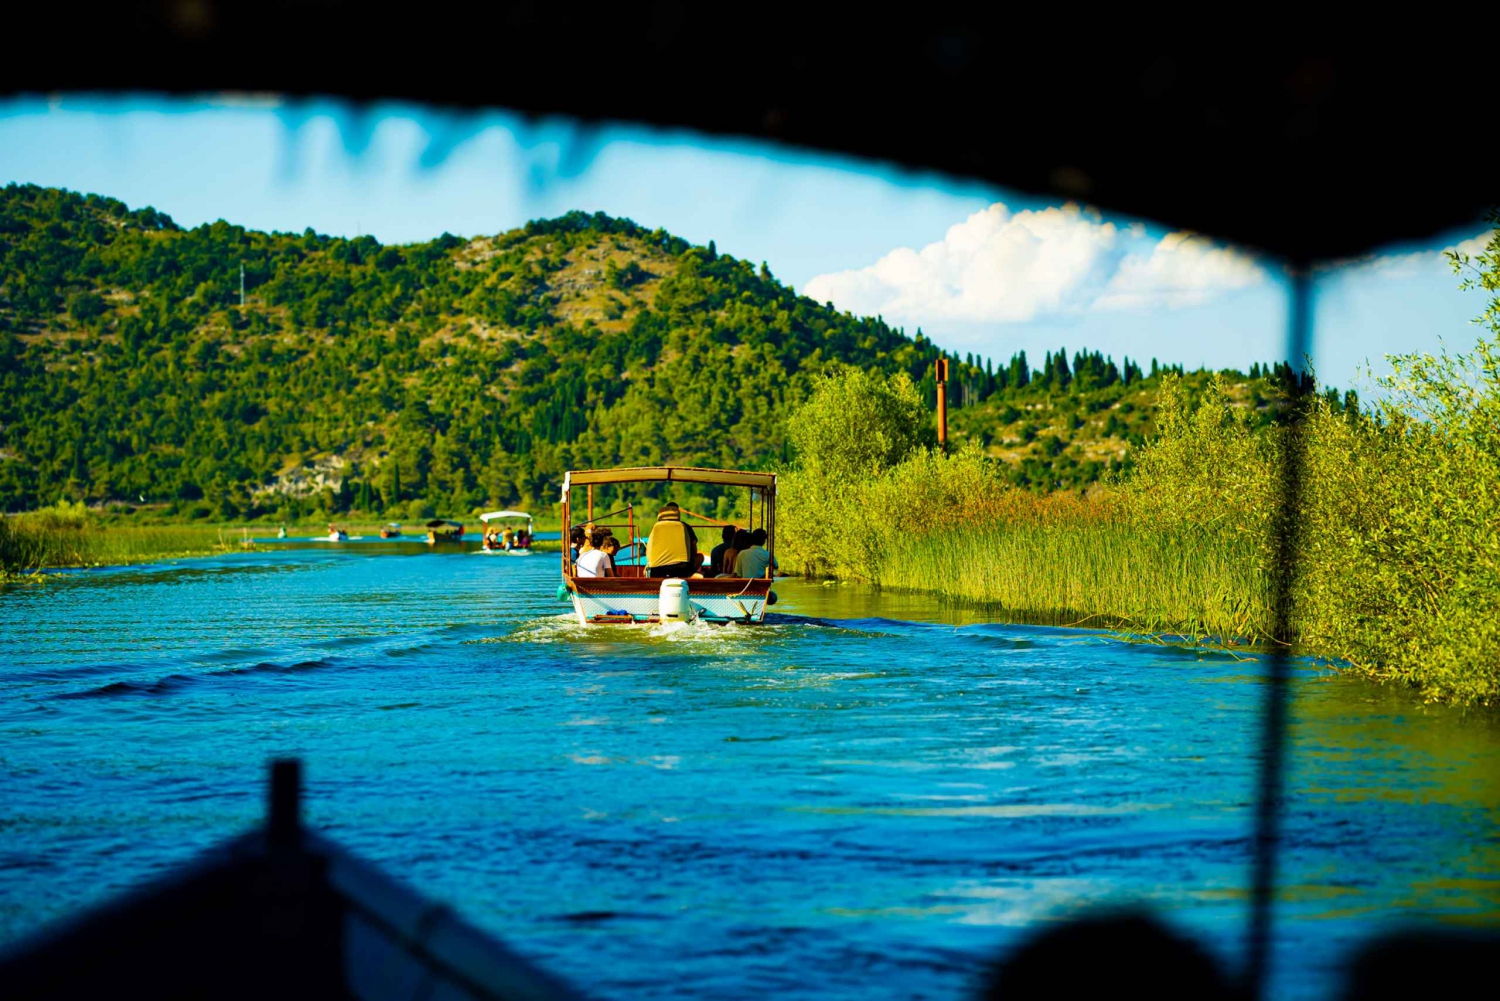 Virpazar : Unforgettable Sunset Boat Cruise to Monastery Kom